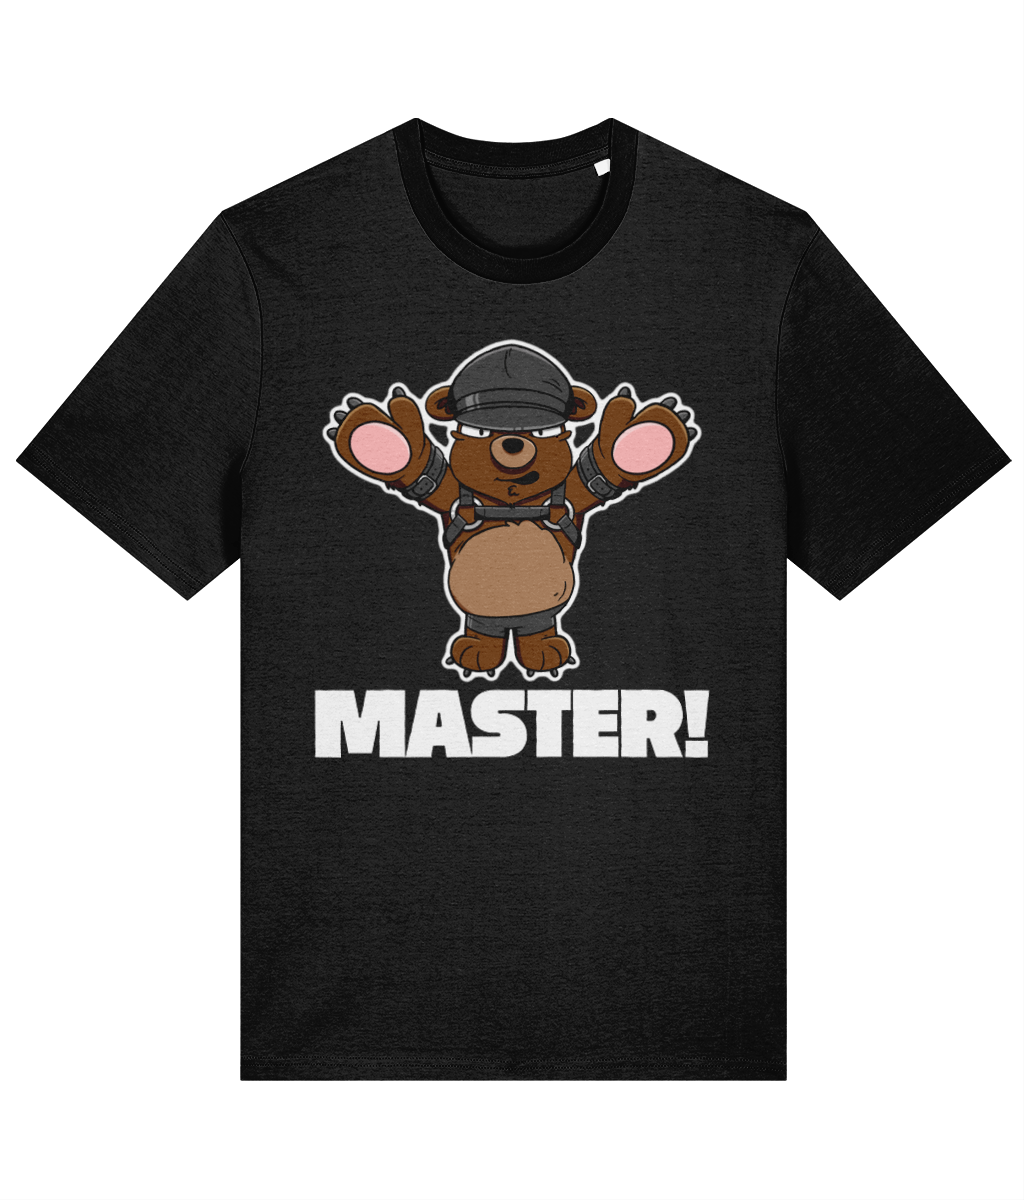 Master! T-Shirt